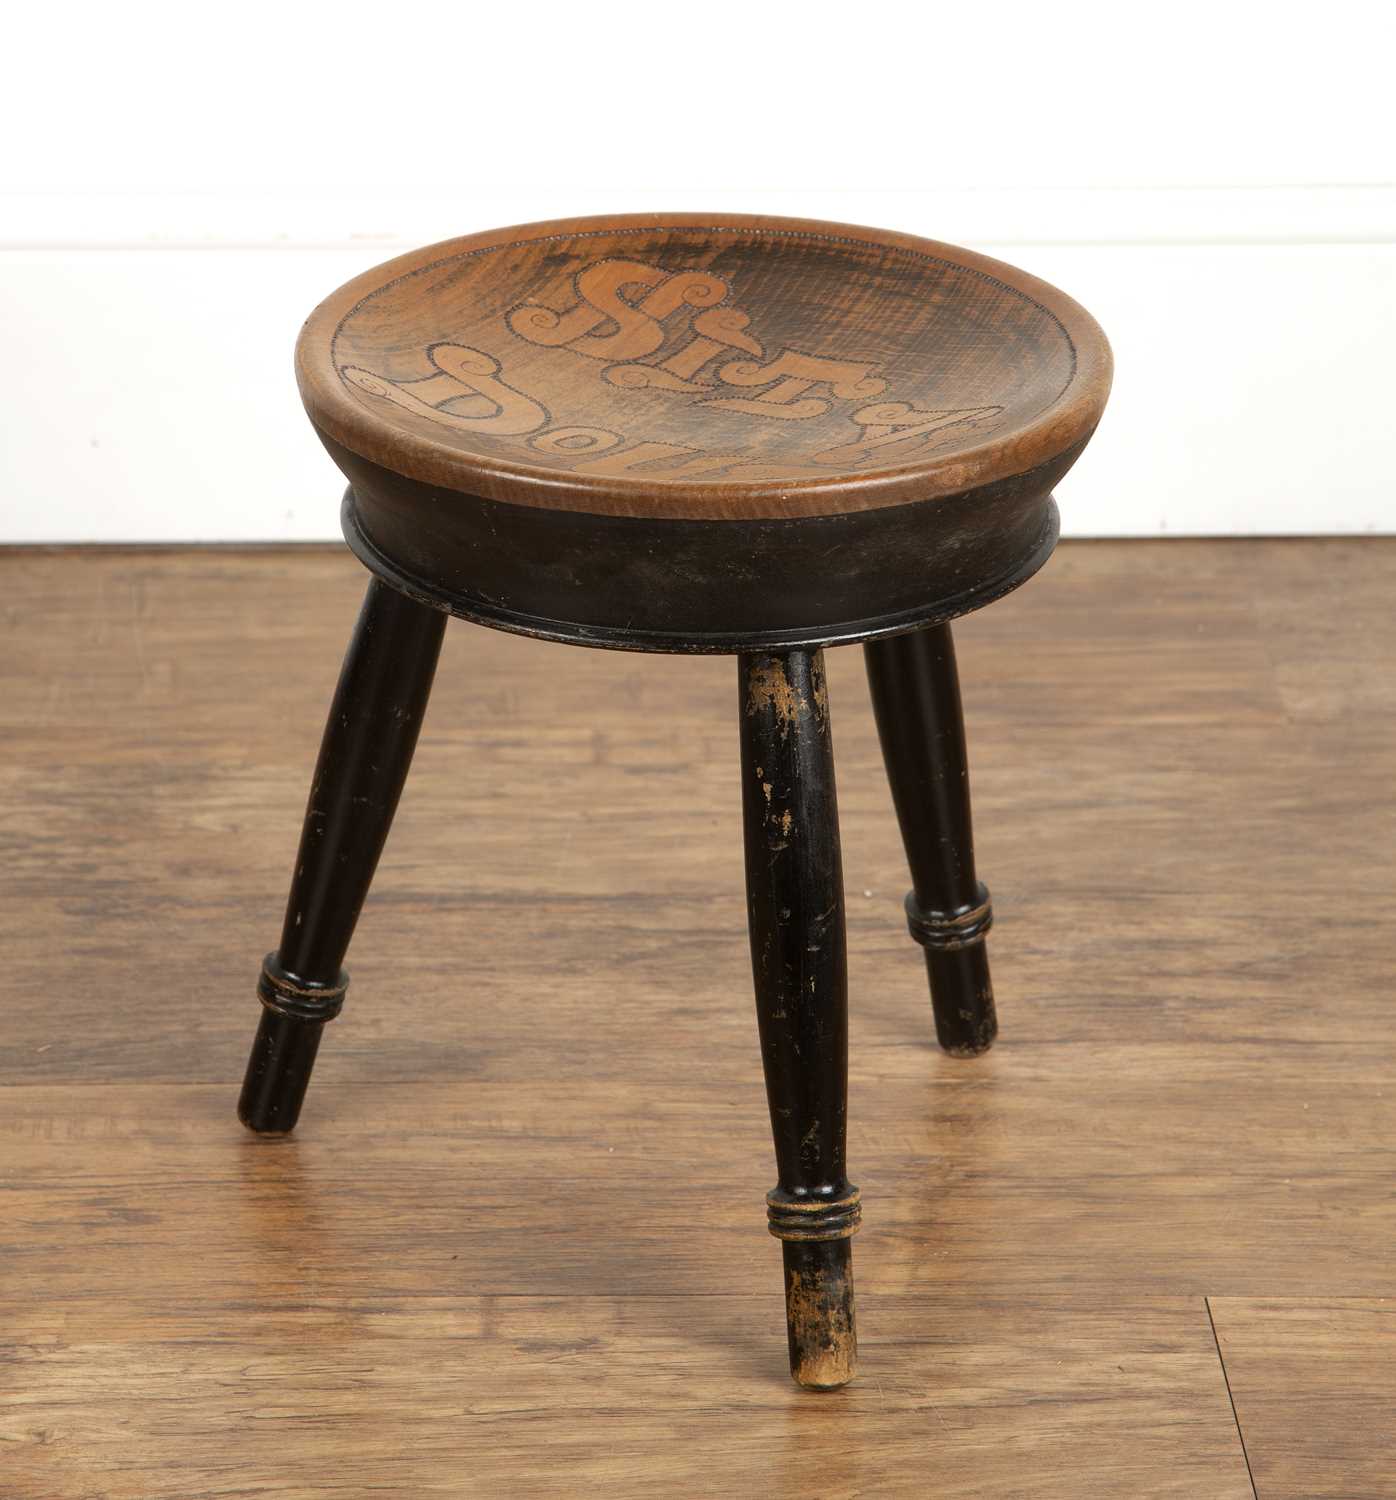 Scottish School low stool with ebonised base and circular pokerwork top reading 'Sit ye doun', - Image 3 of 6